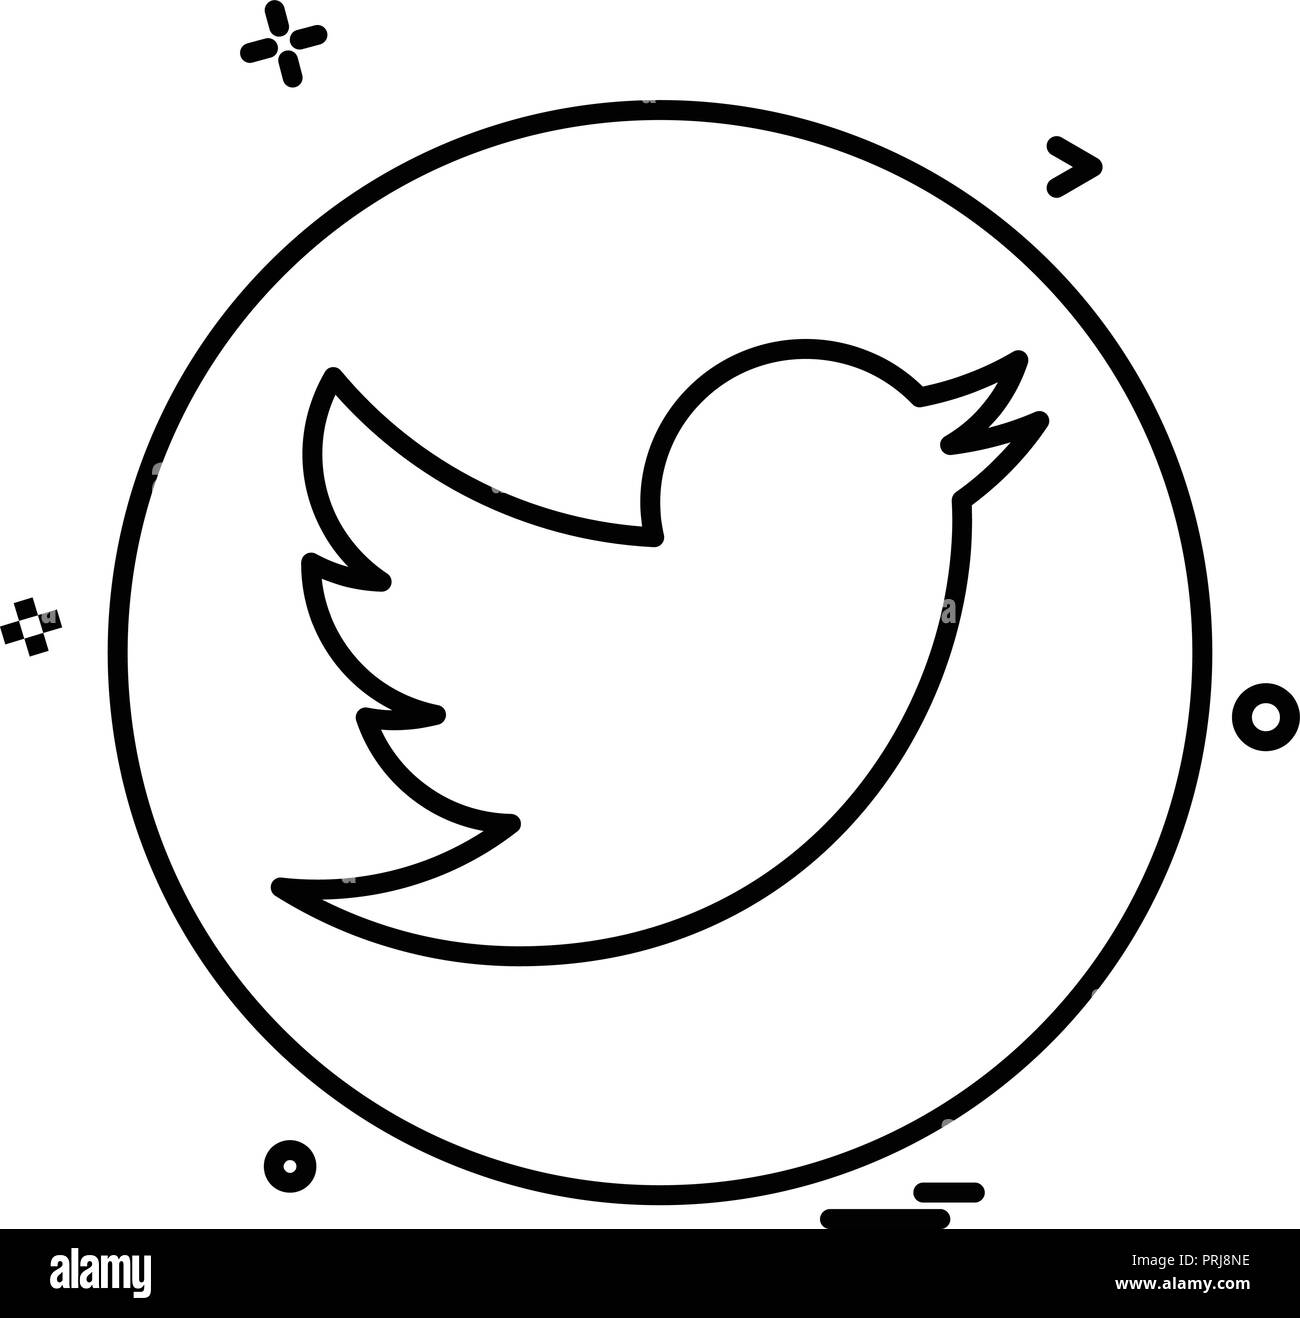 Twitter Logo Black And White Stock Photos Images Alamy